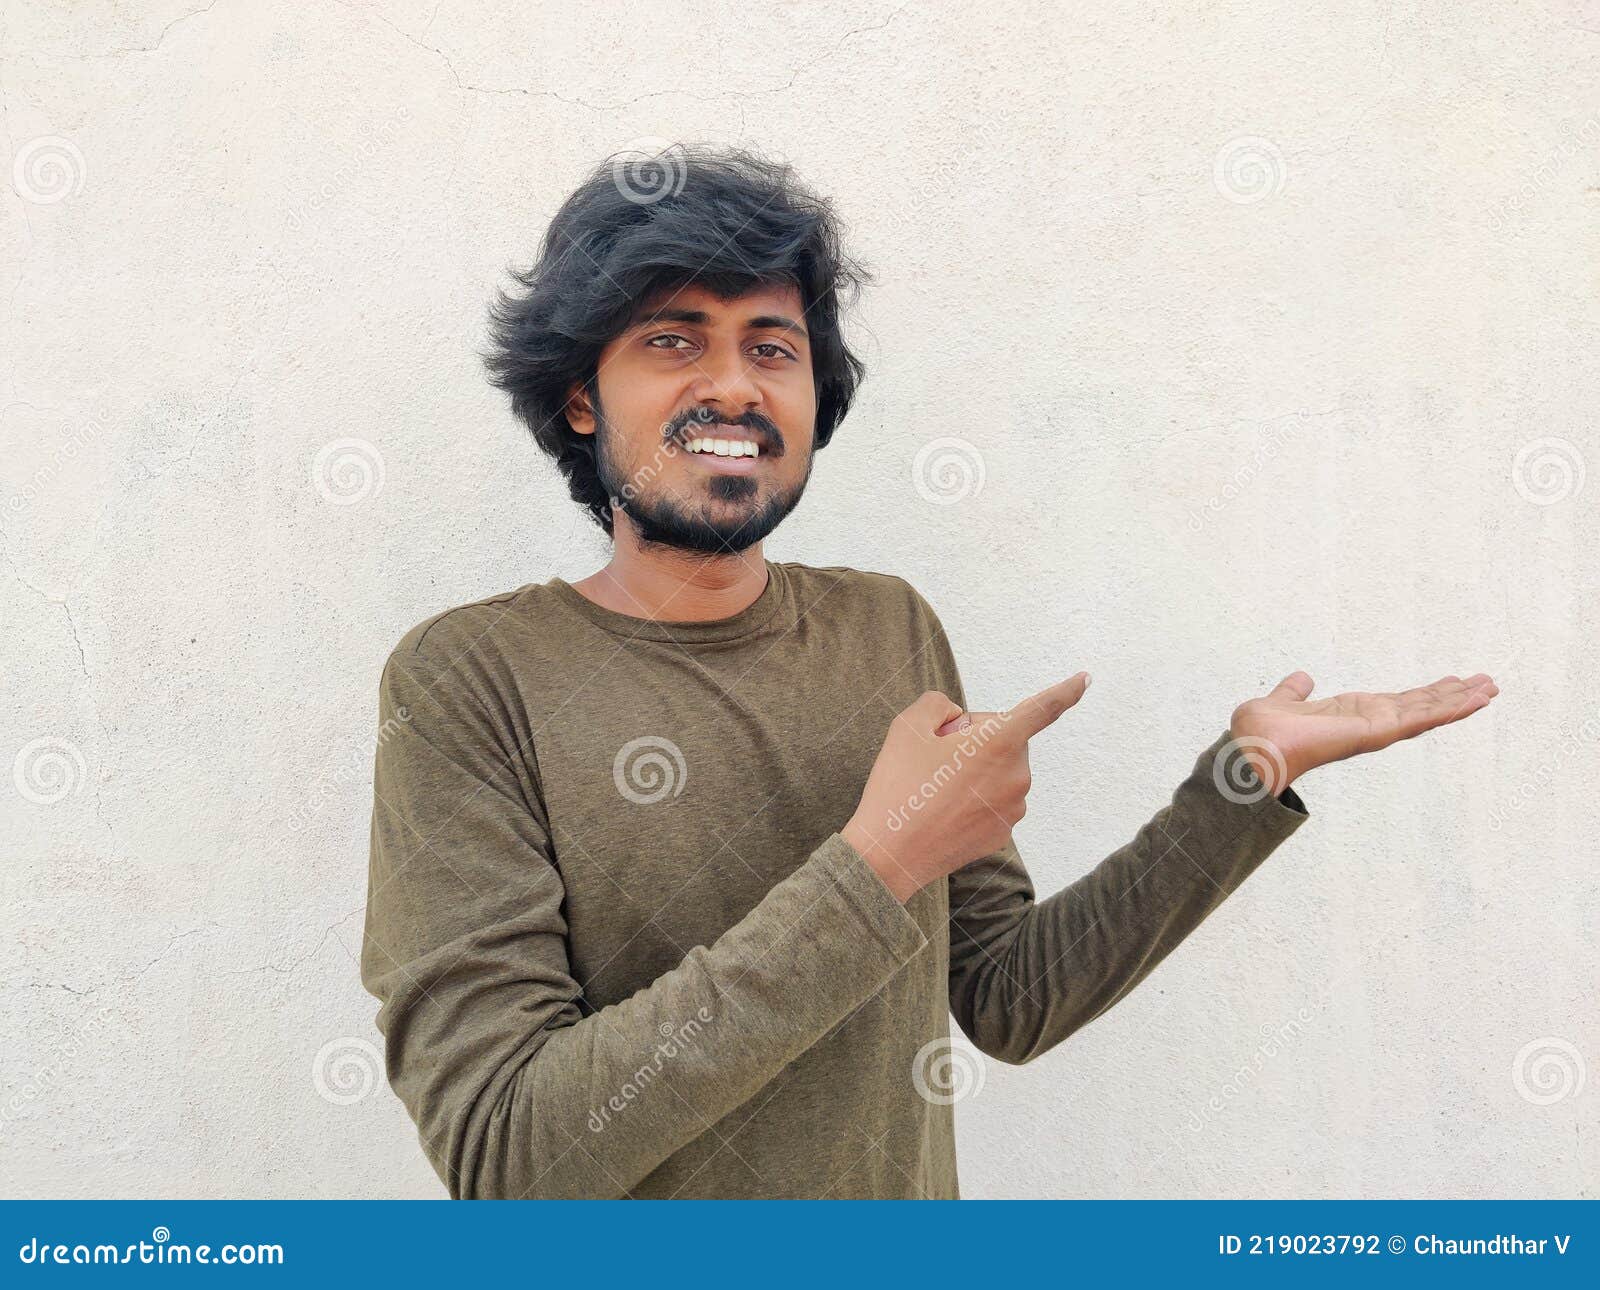 Tamil handsome guys photo